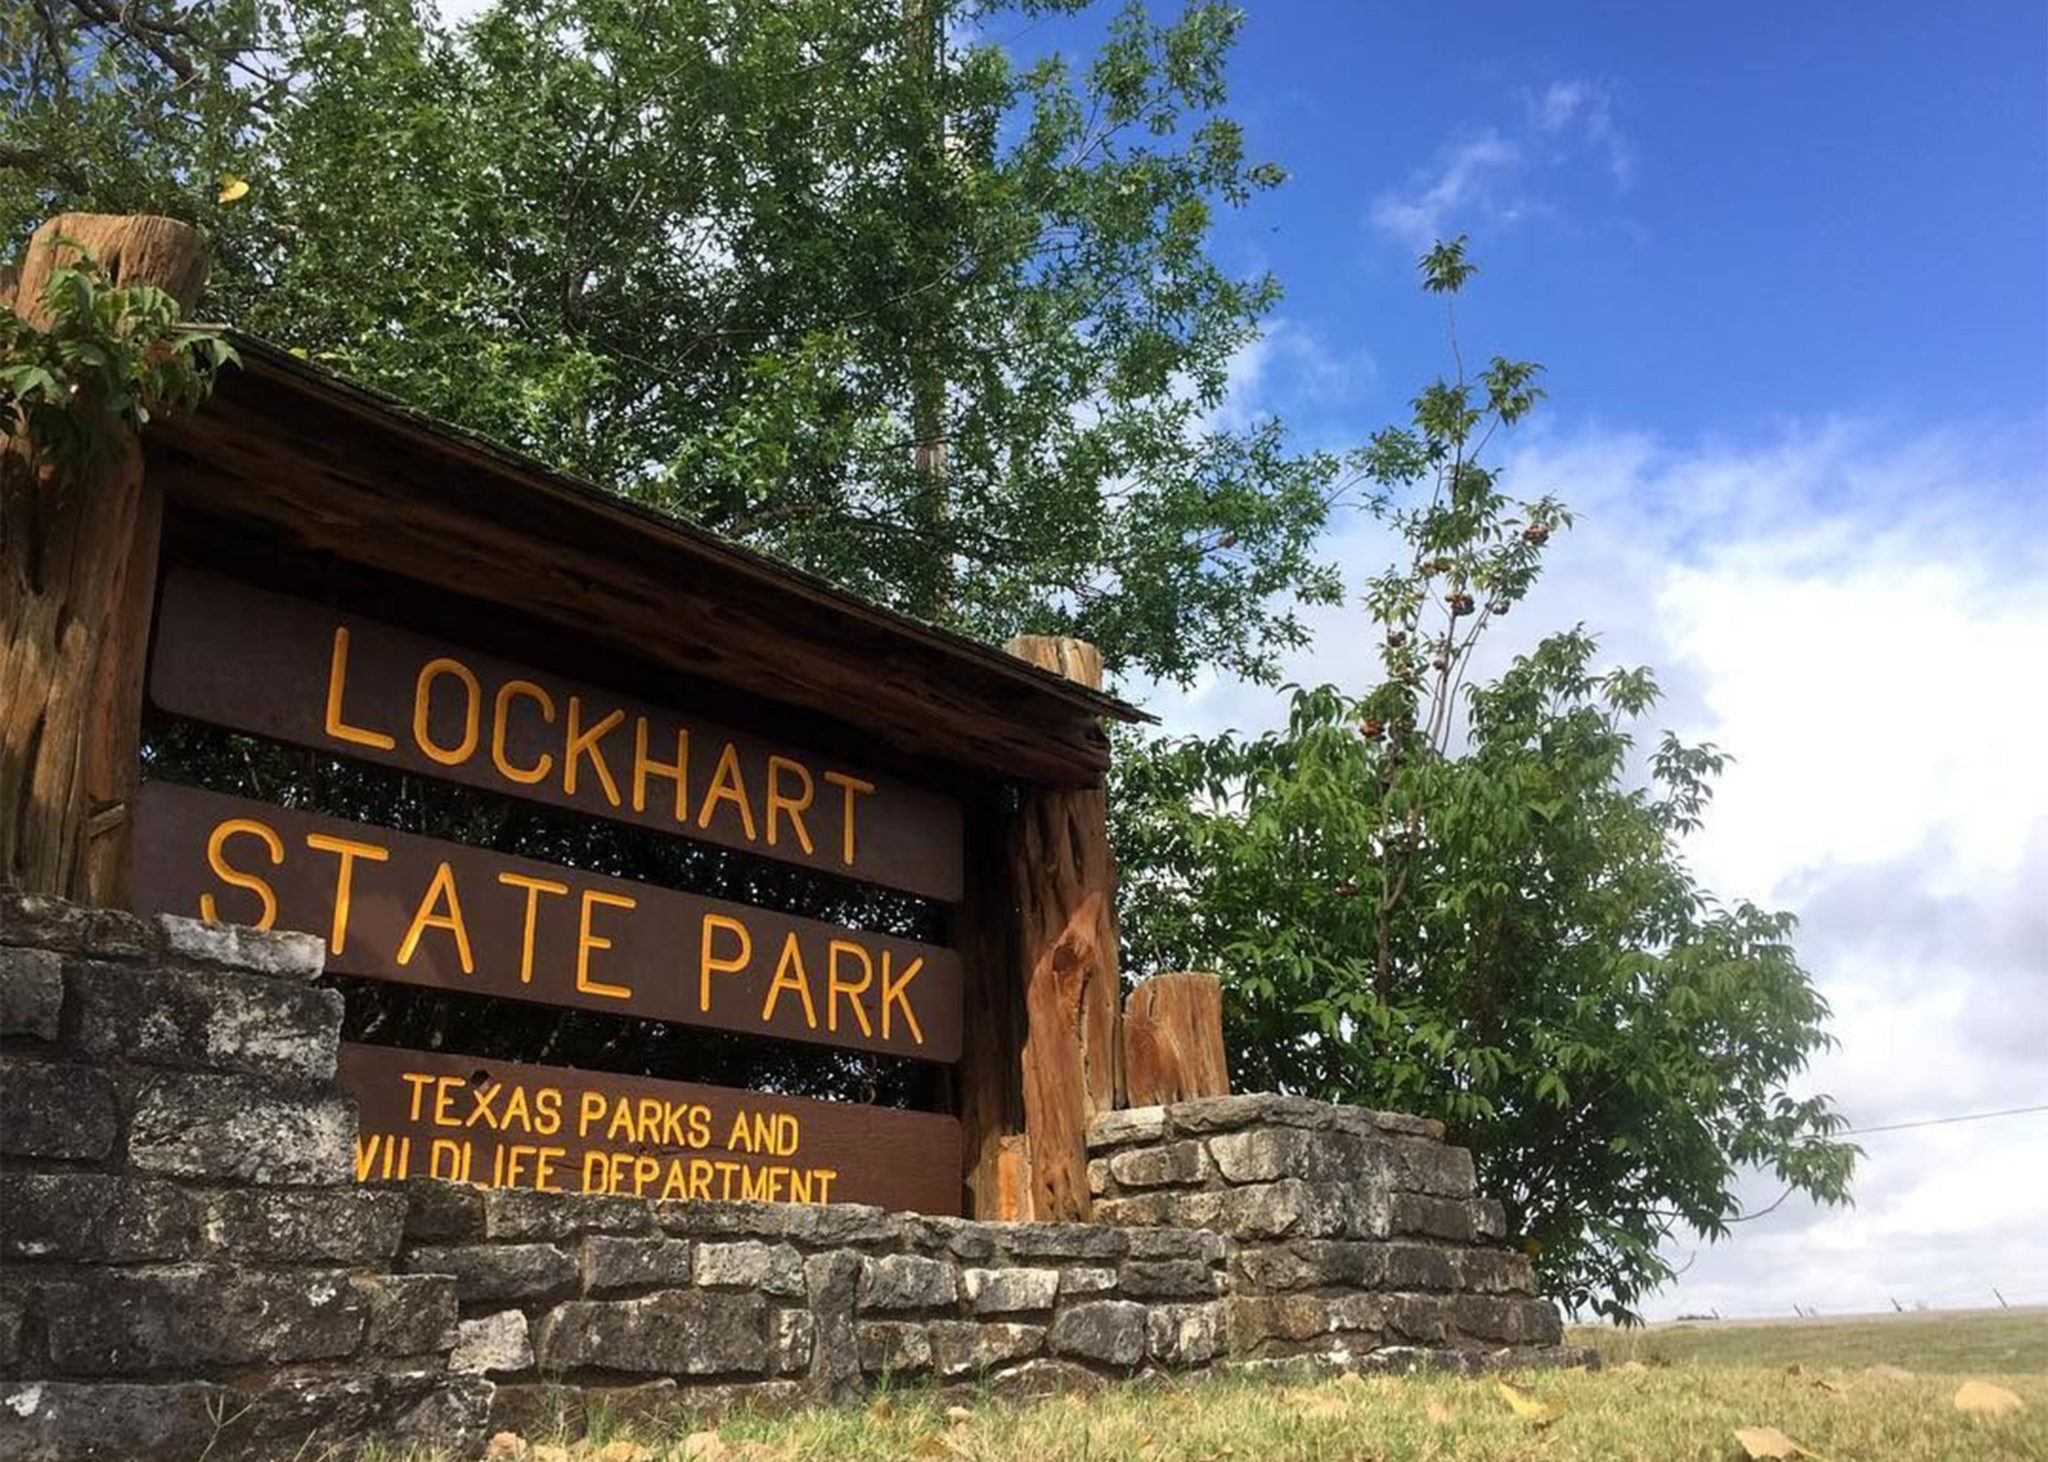 Lockhart State Park sign